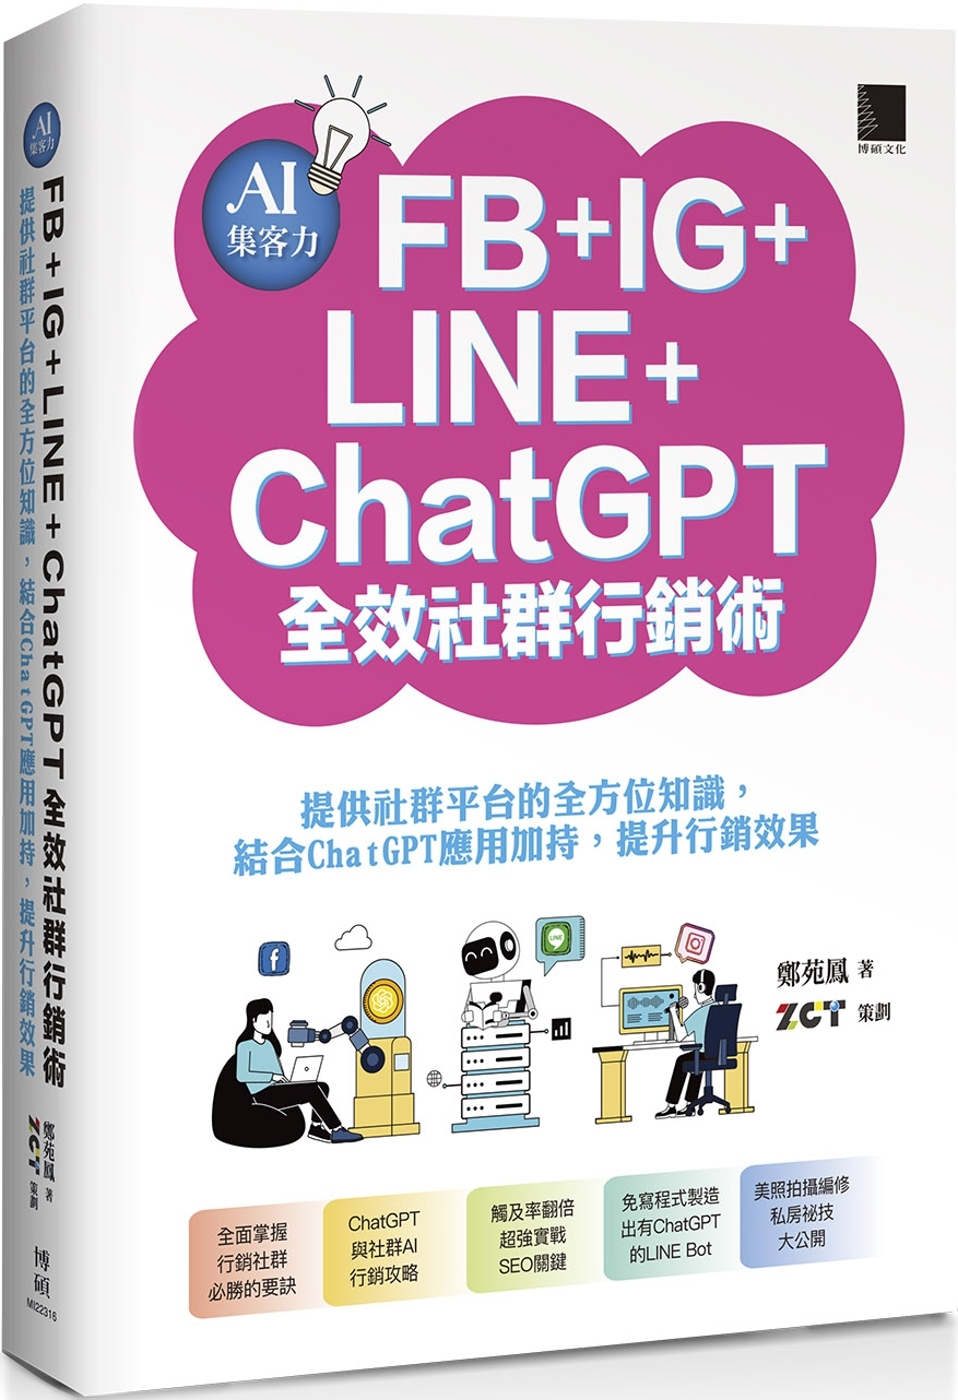 AI集客力！FB+IG+LINE+ChatGPT全效社群行銷...